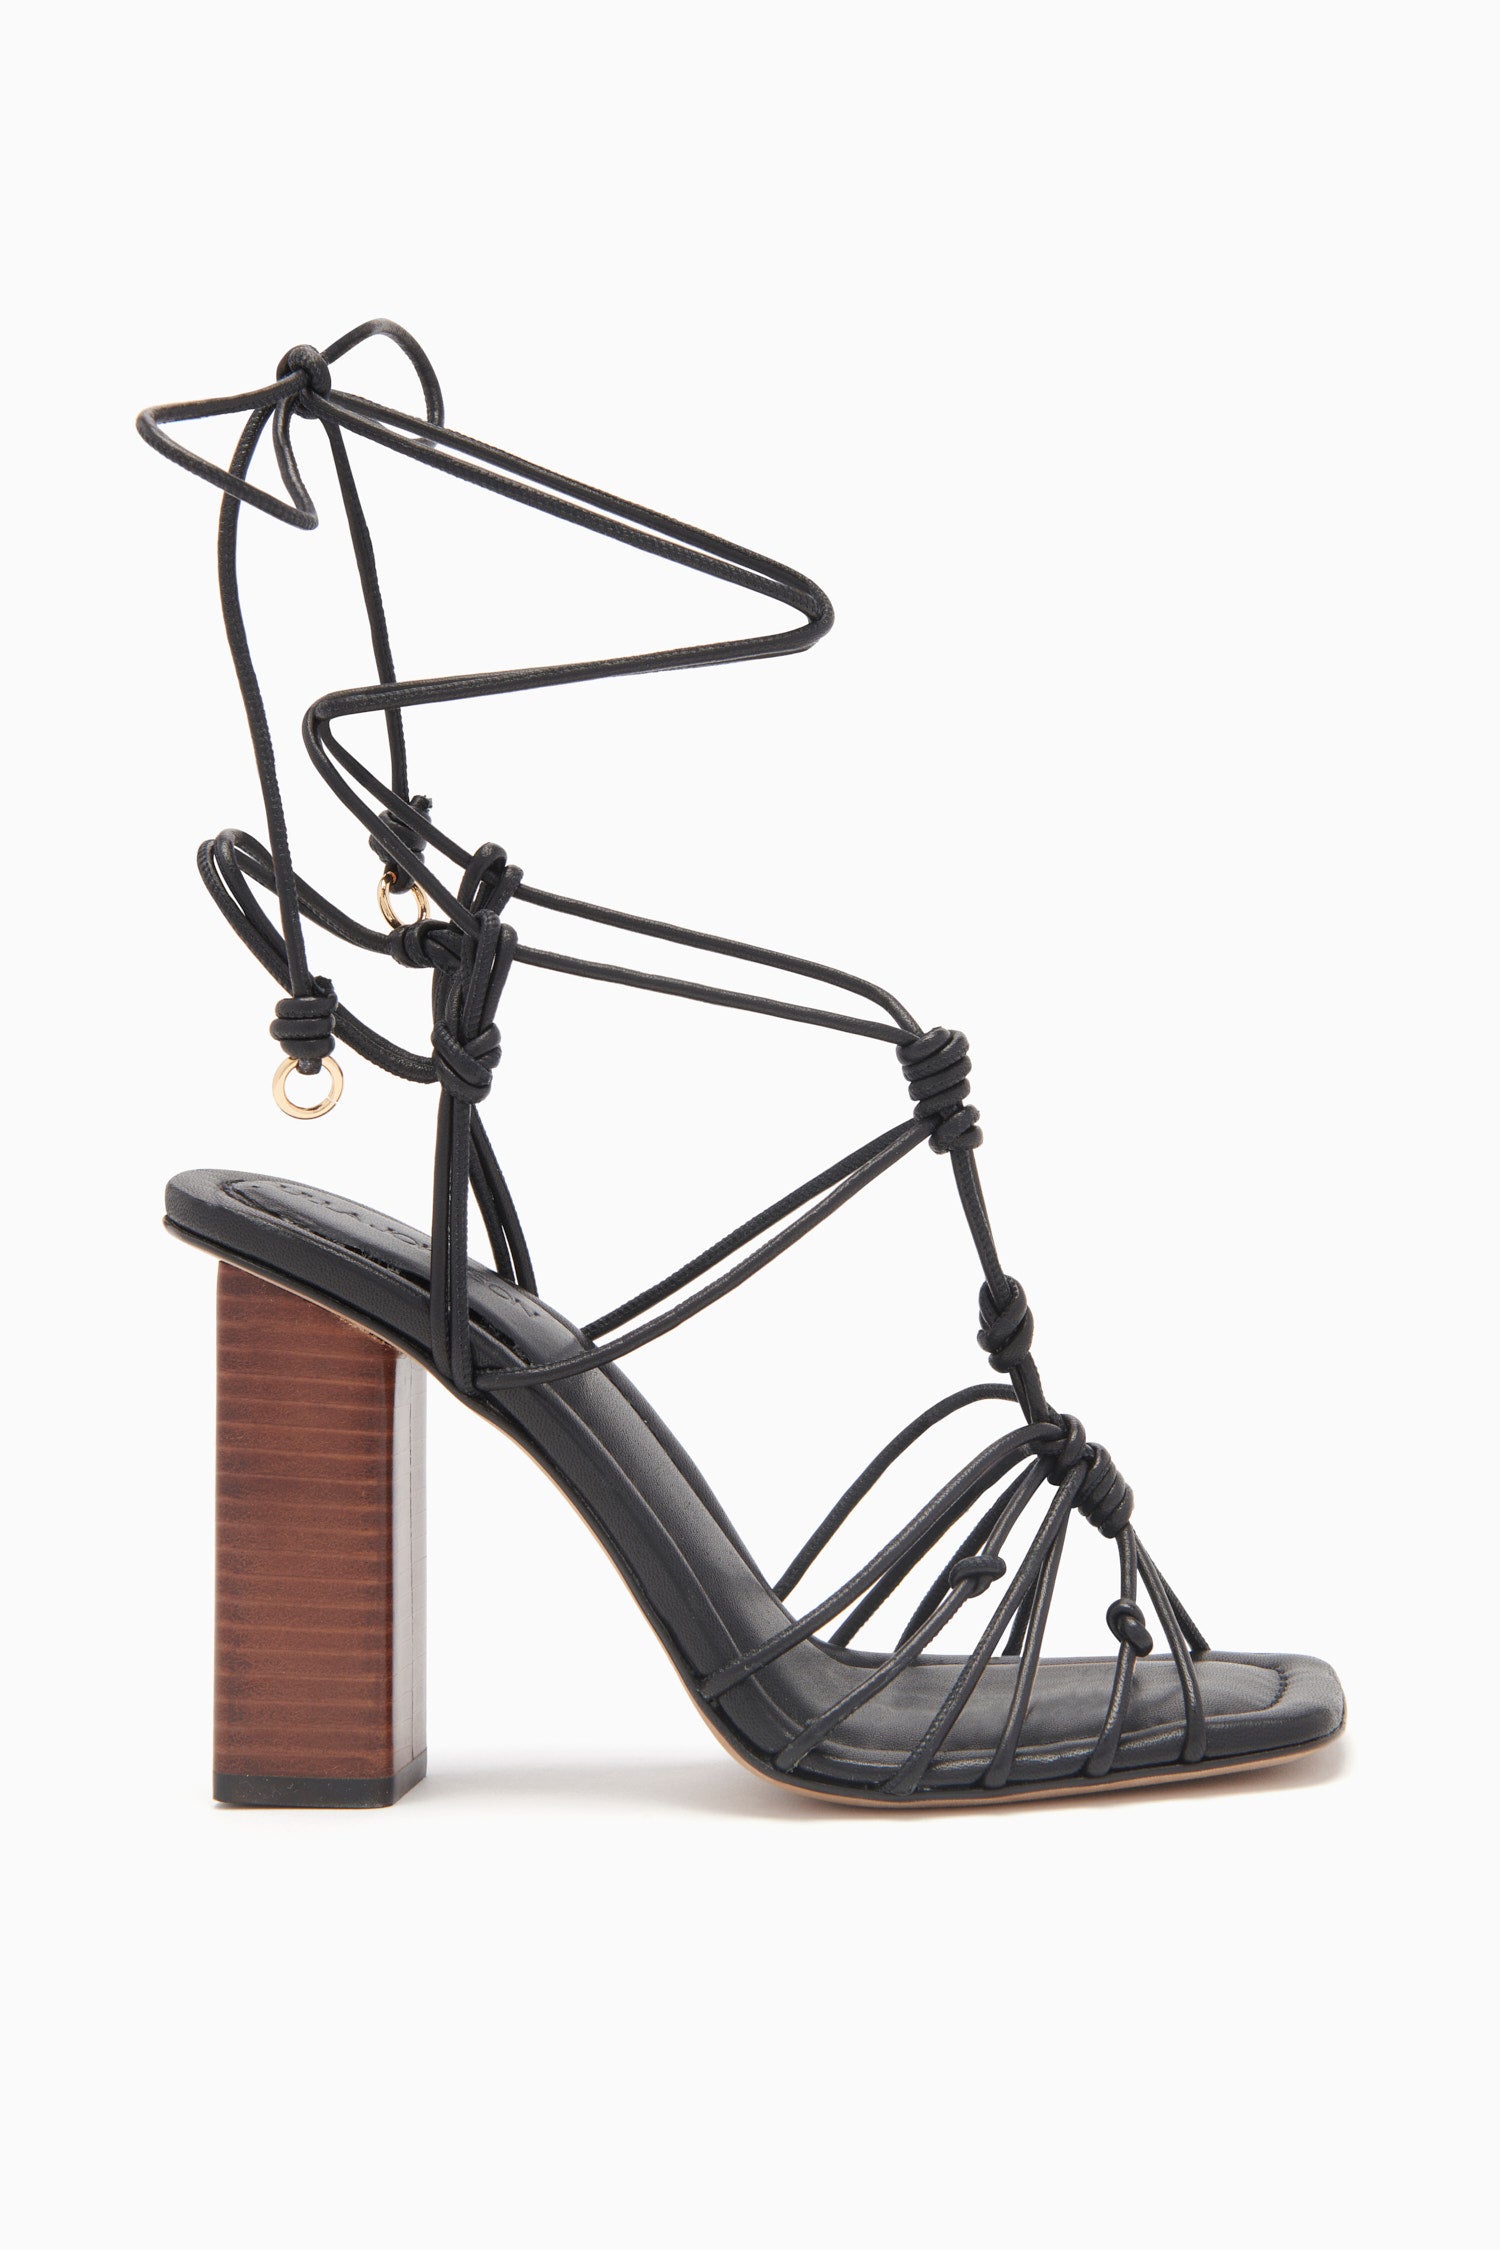 Aldo SAFDIE001 BLACK Women Synthetic Block Heel Sandals : Amazon.in: Fashion